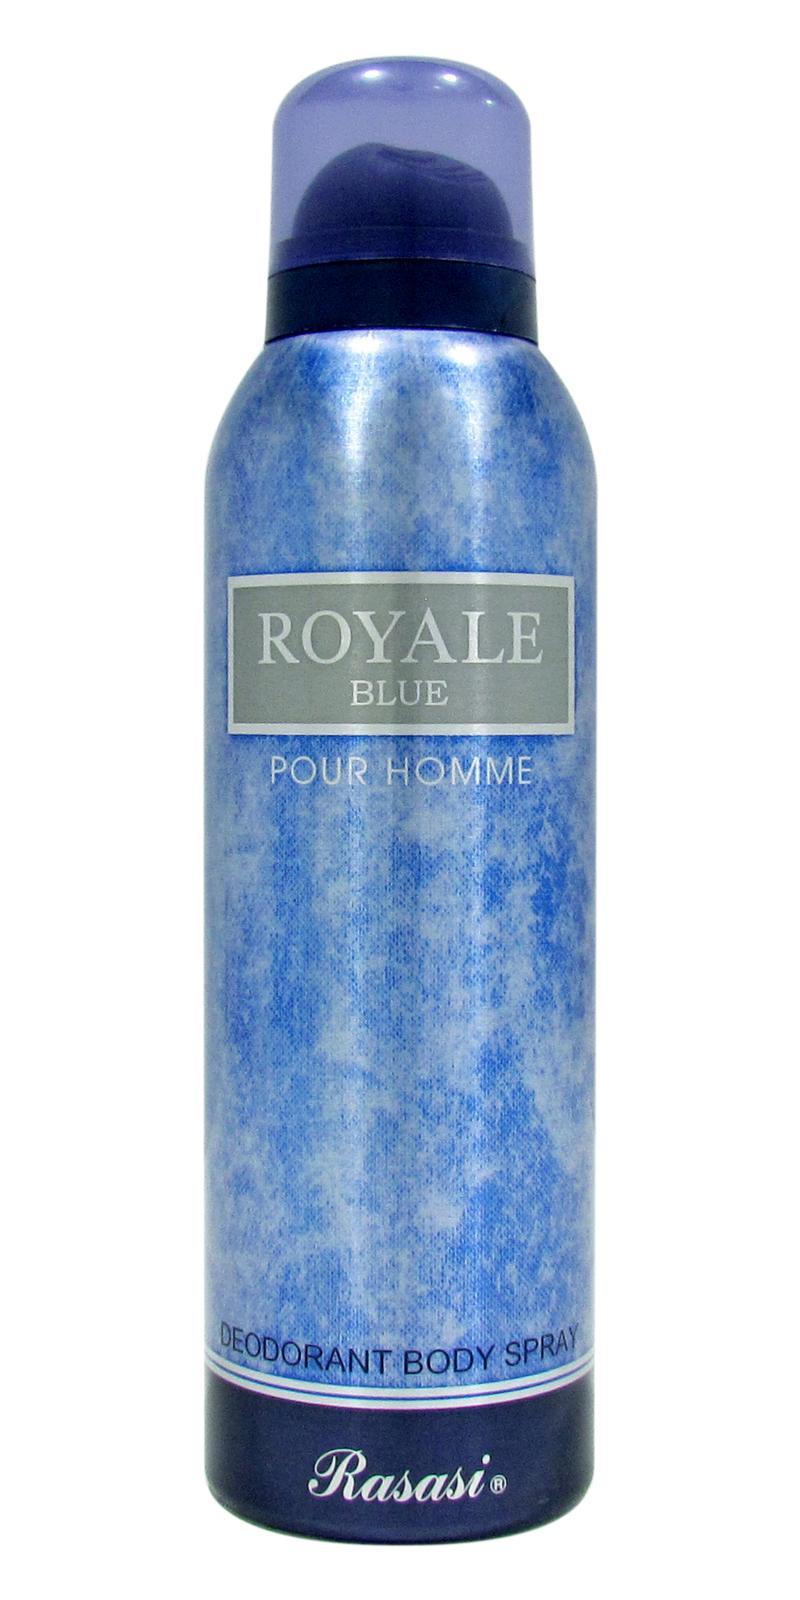 Royale Blue for Men Deodorant - 100ML (6.7 oz) by Rasasi - Intense oud